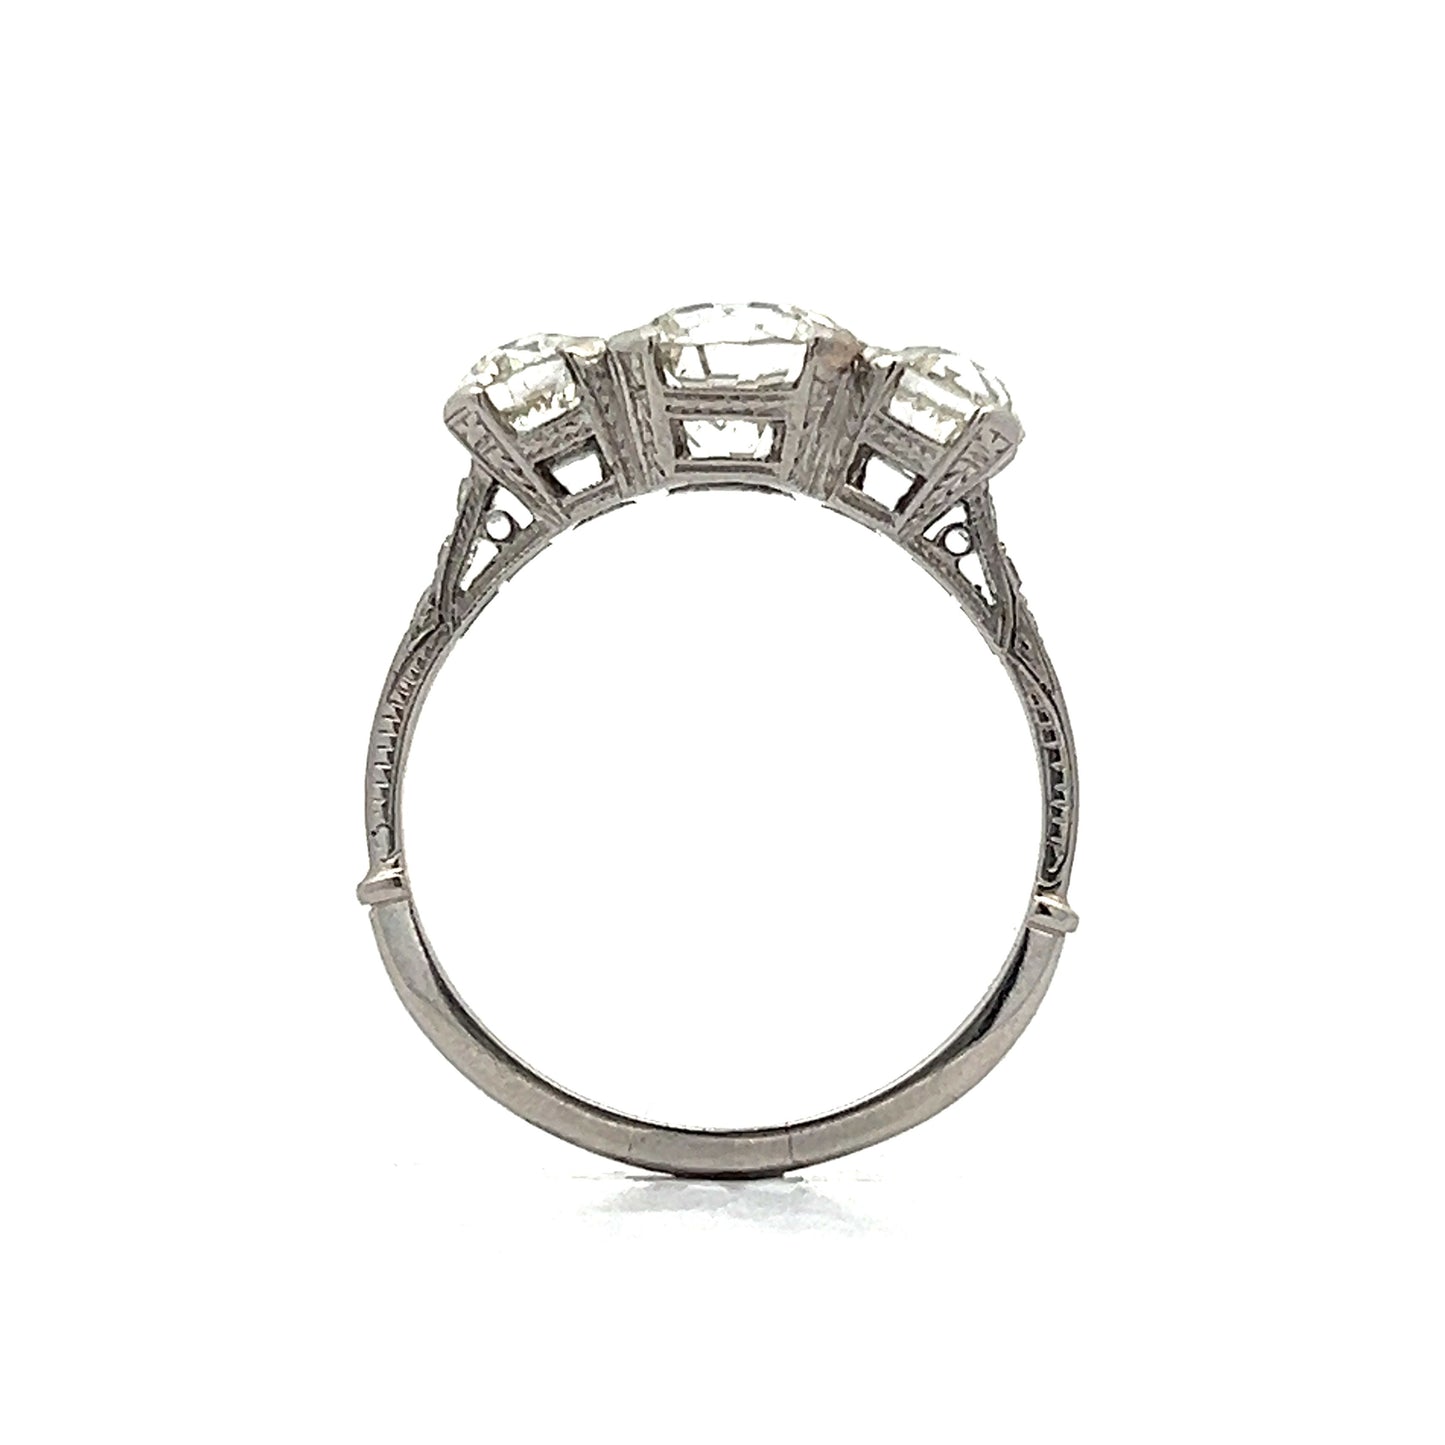 3.15 Vintage Three Stone Old European Diamond Engagement Ring